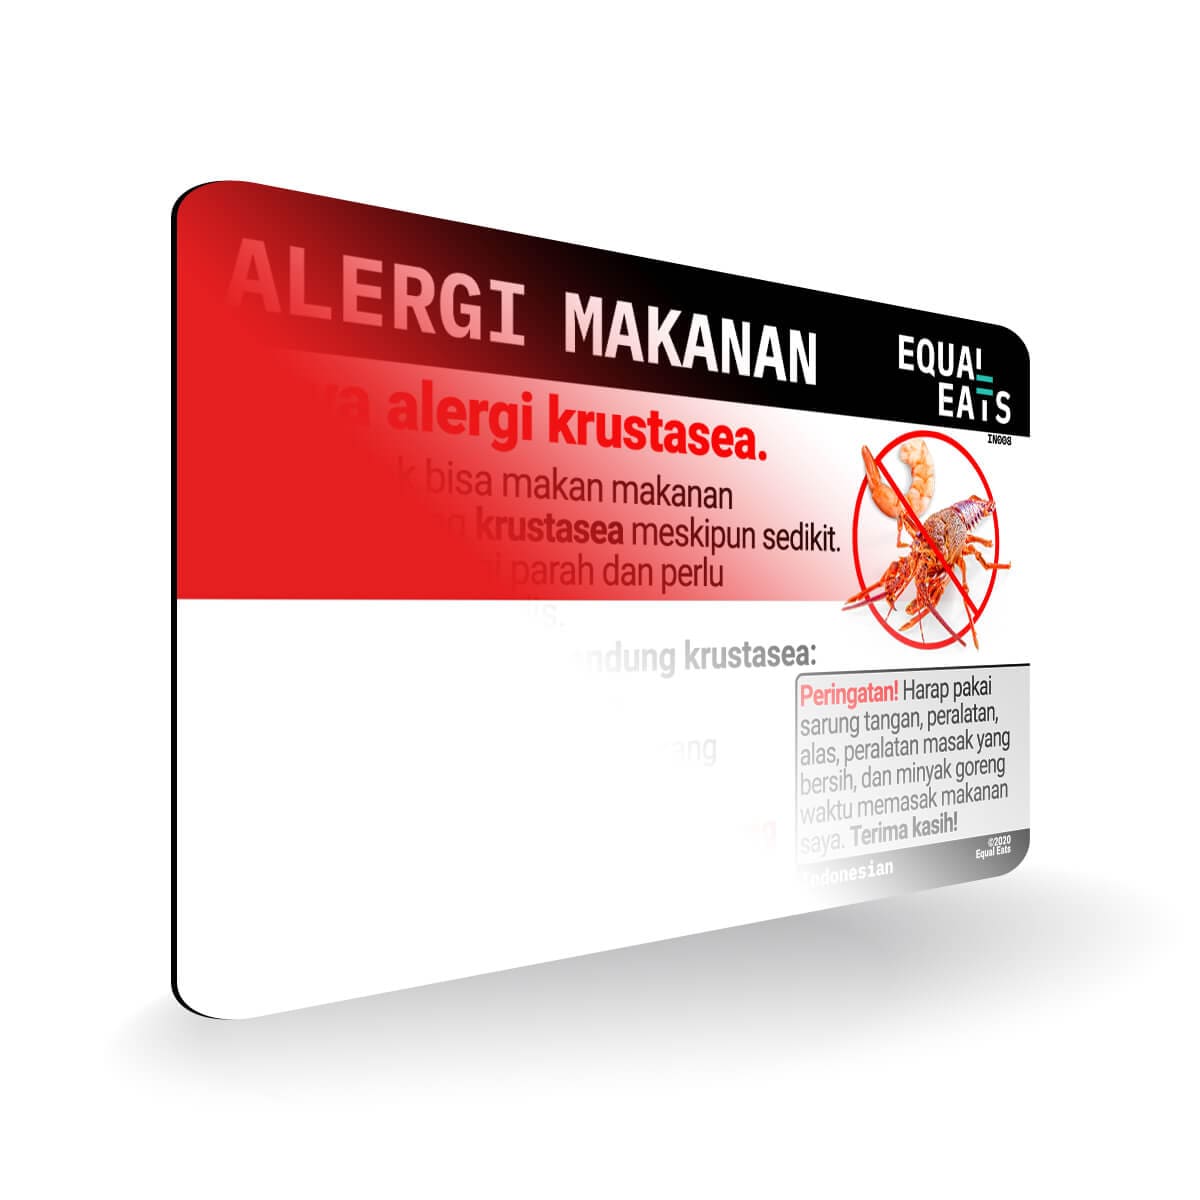 Crustacean Allergy in Indonesian. Crustacean Allergy Card for Indonesia